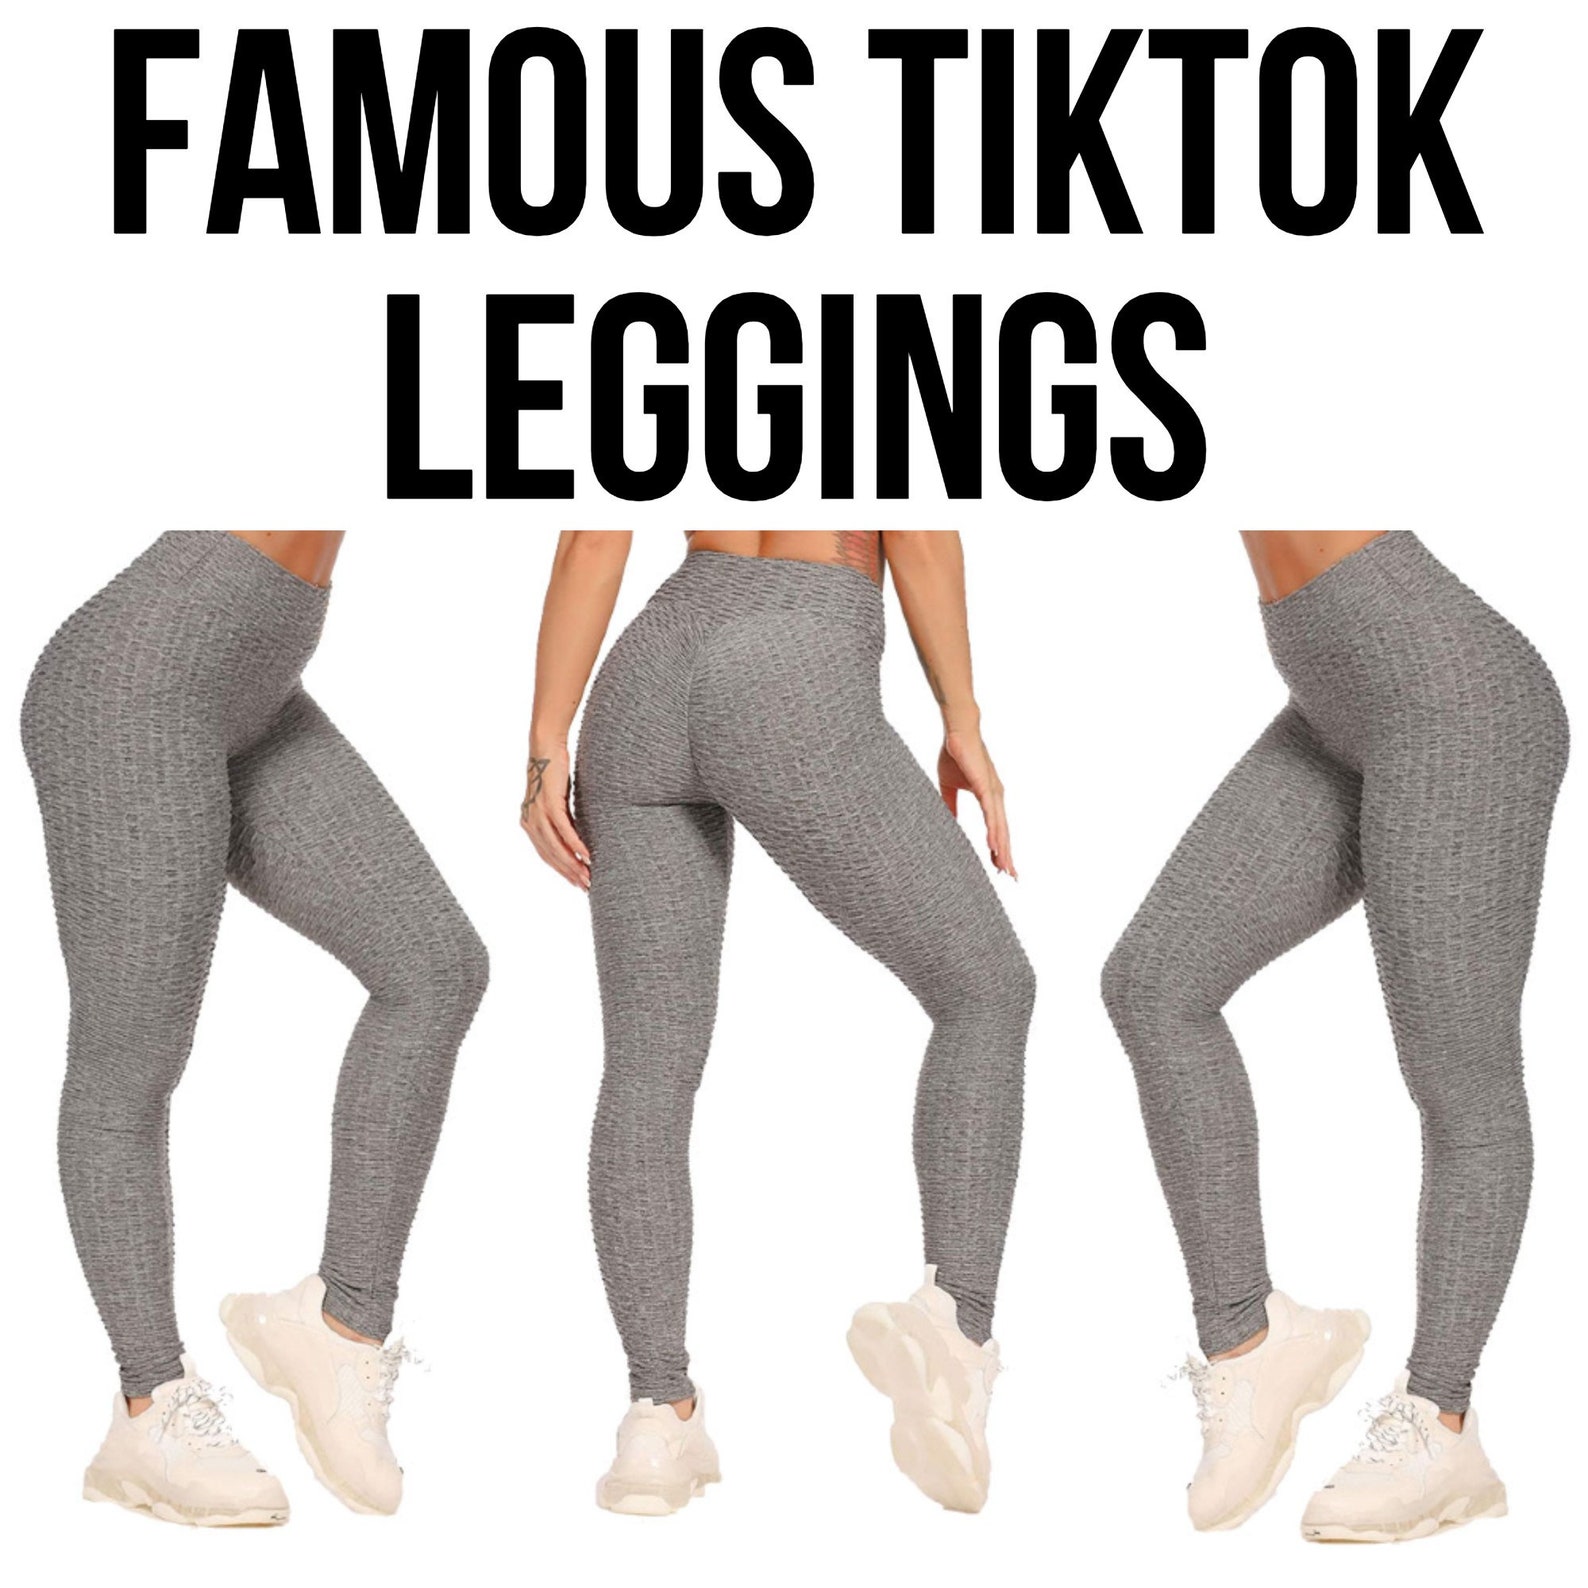 Famous Tiktok Leggings Reviewsnap